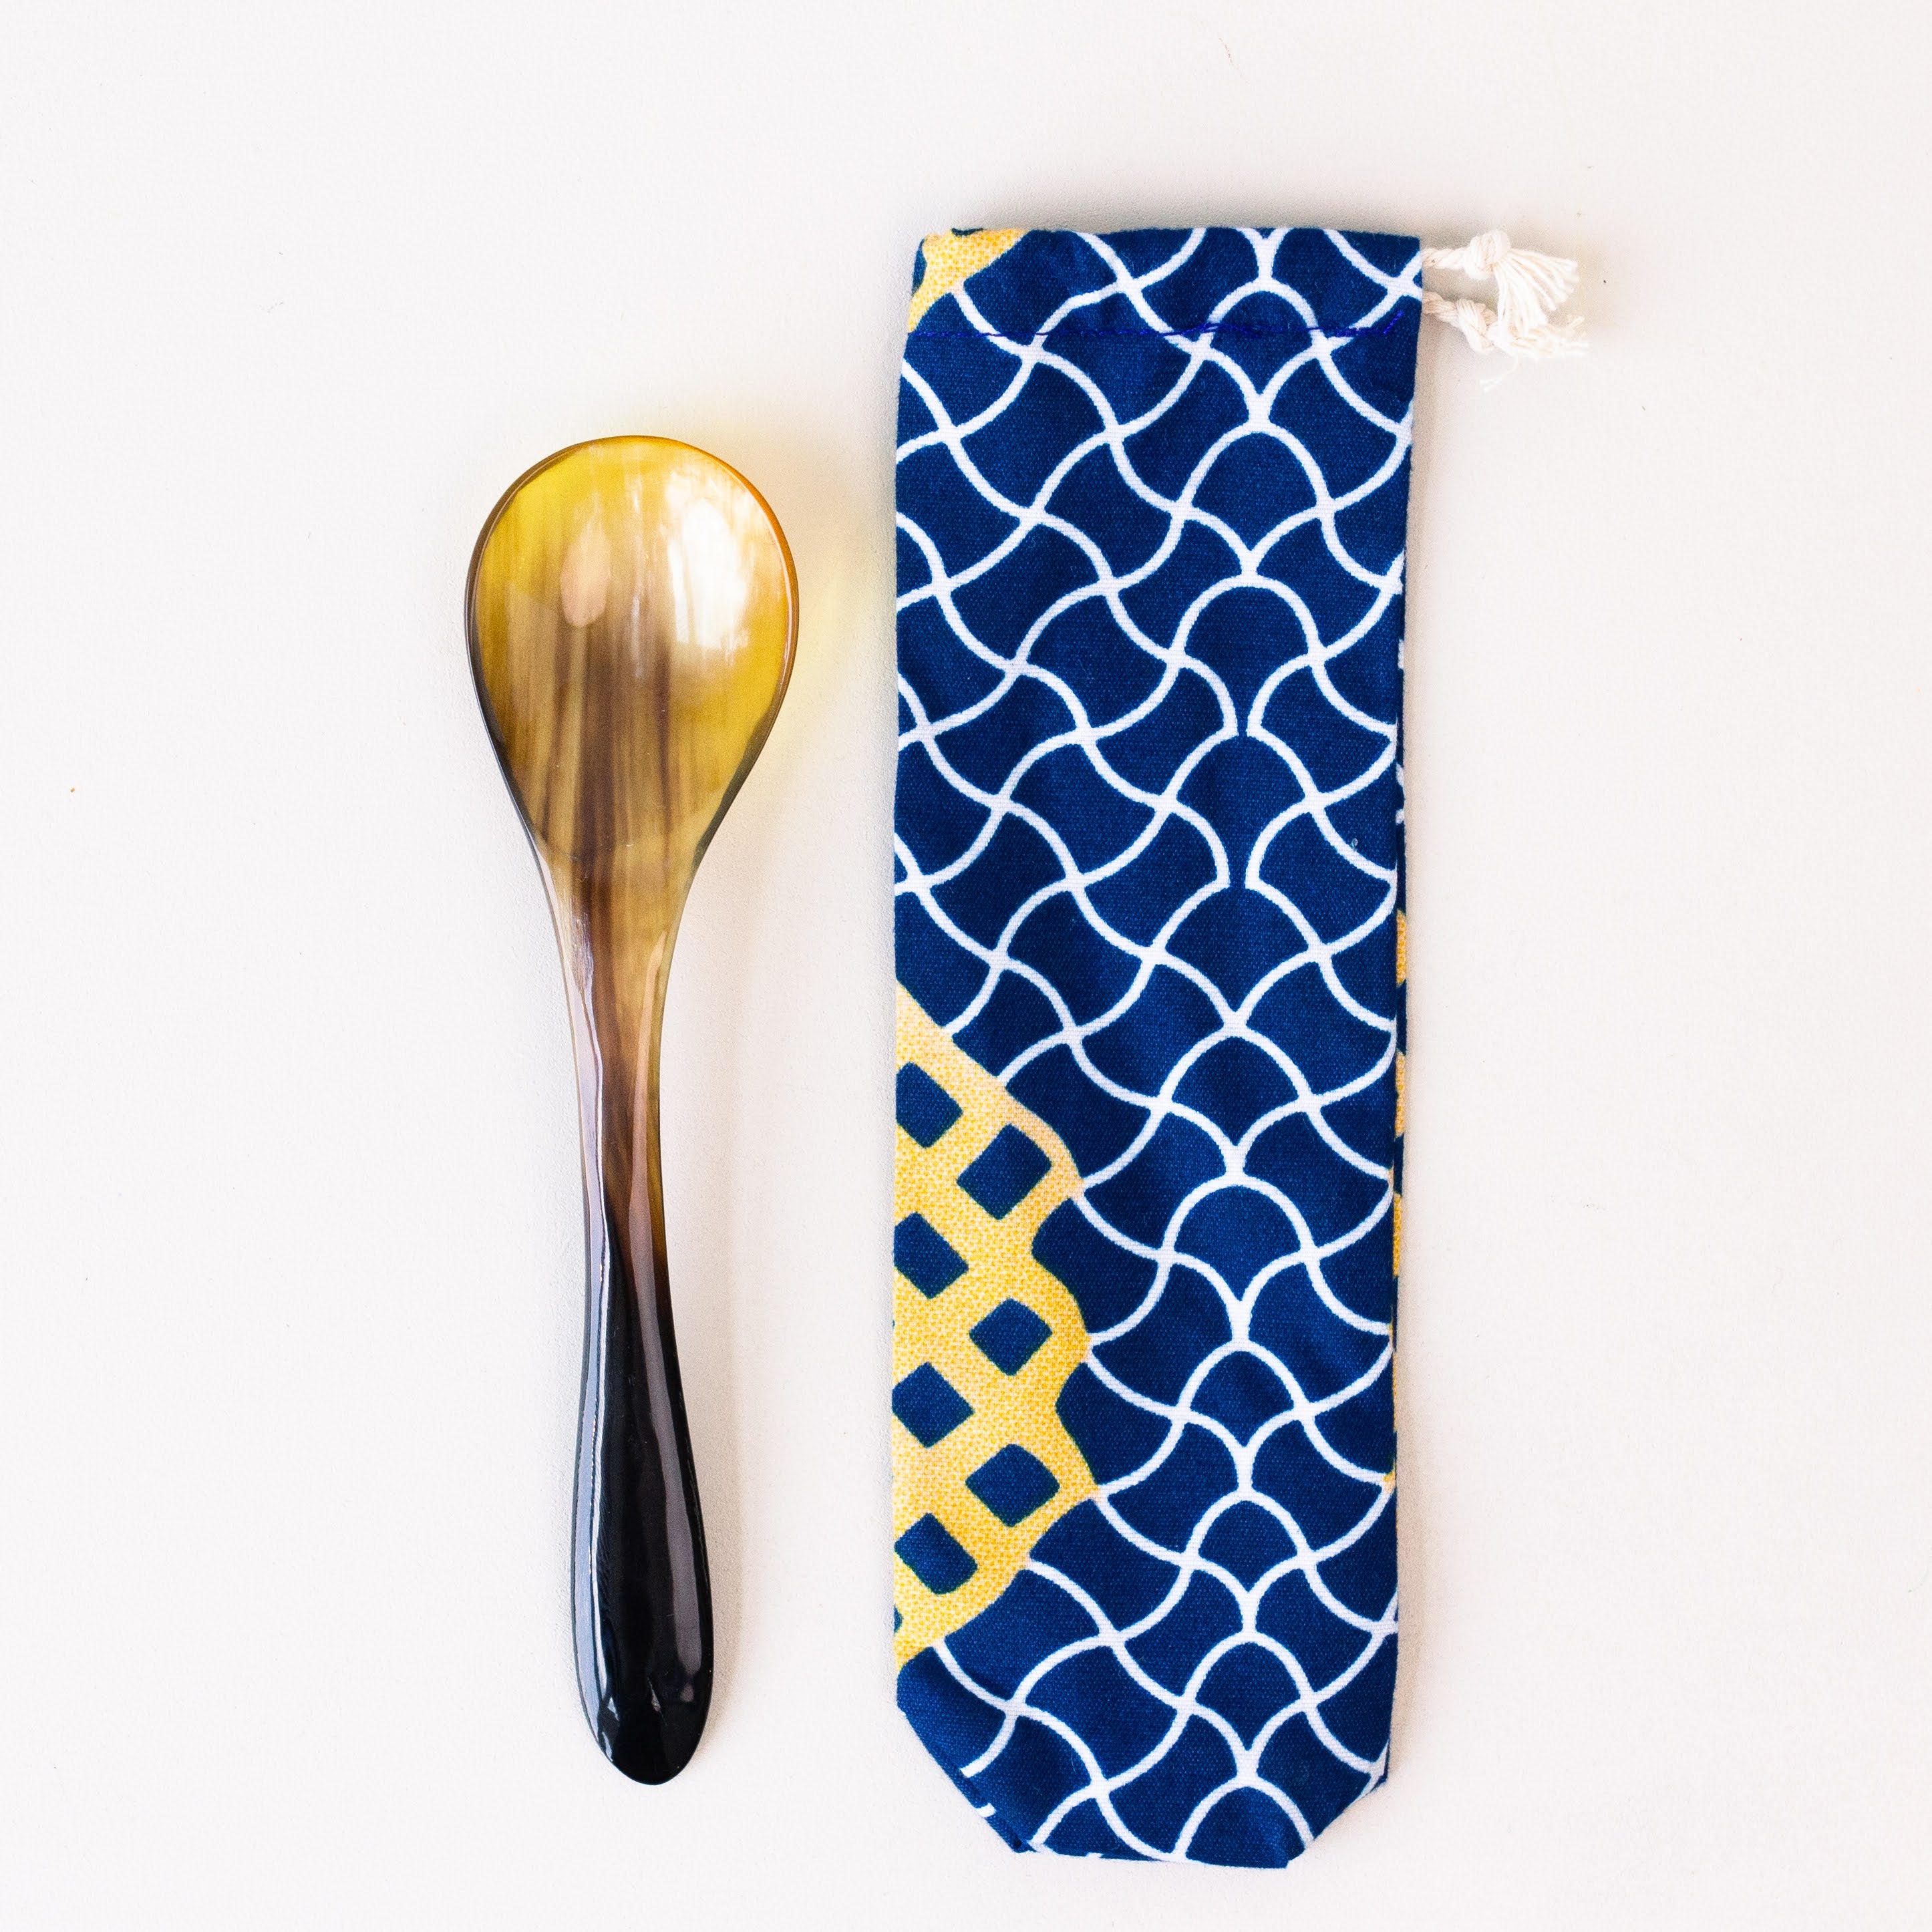 Cow Horn Spoon - handmade by market artisans using Kenyan materials for a Fair Trade boutique